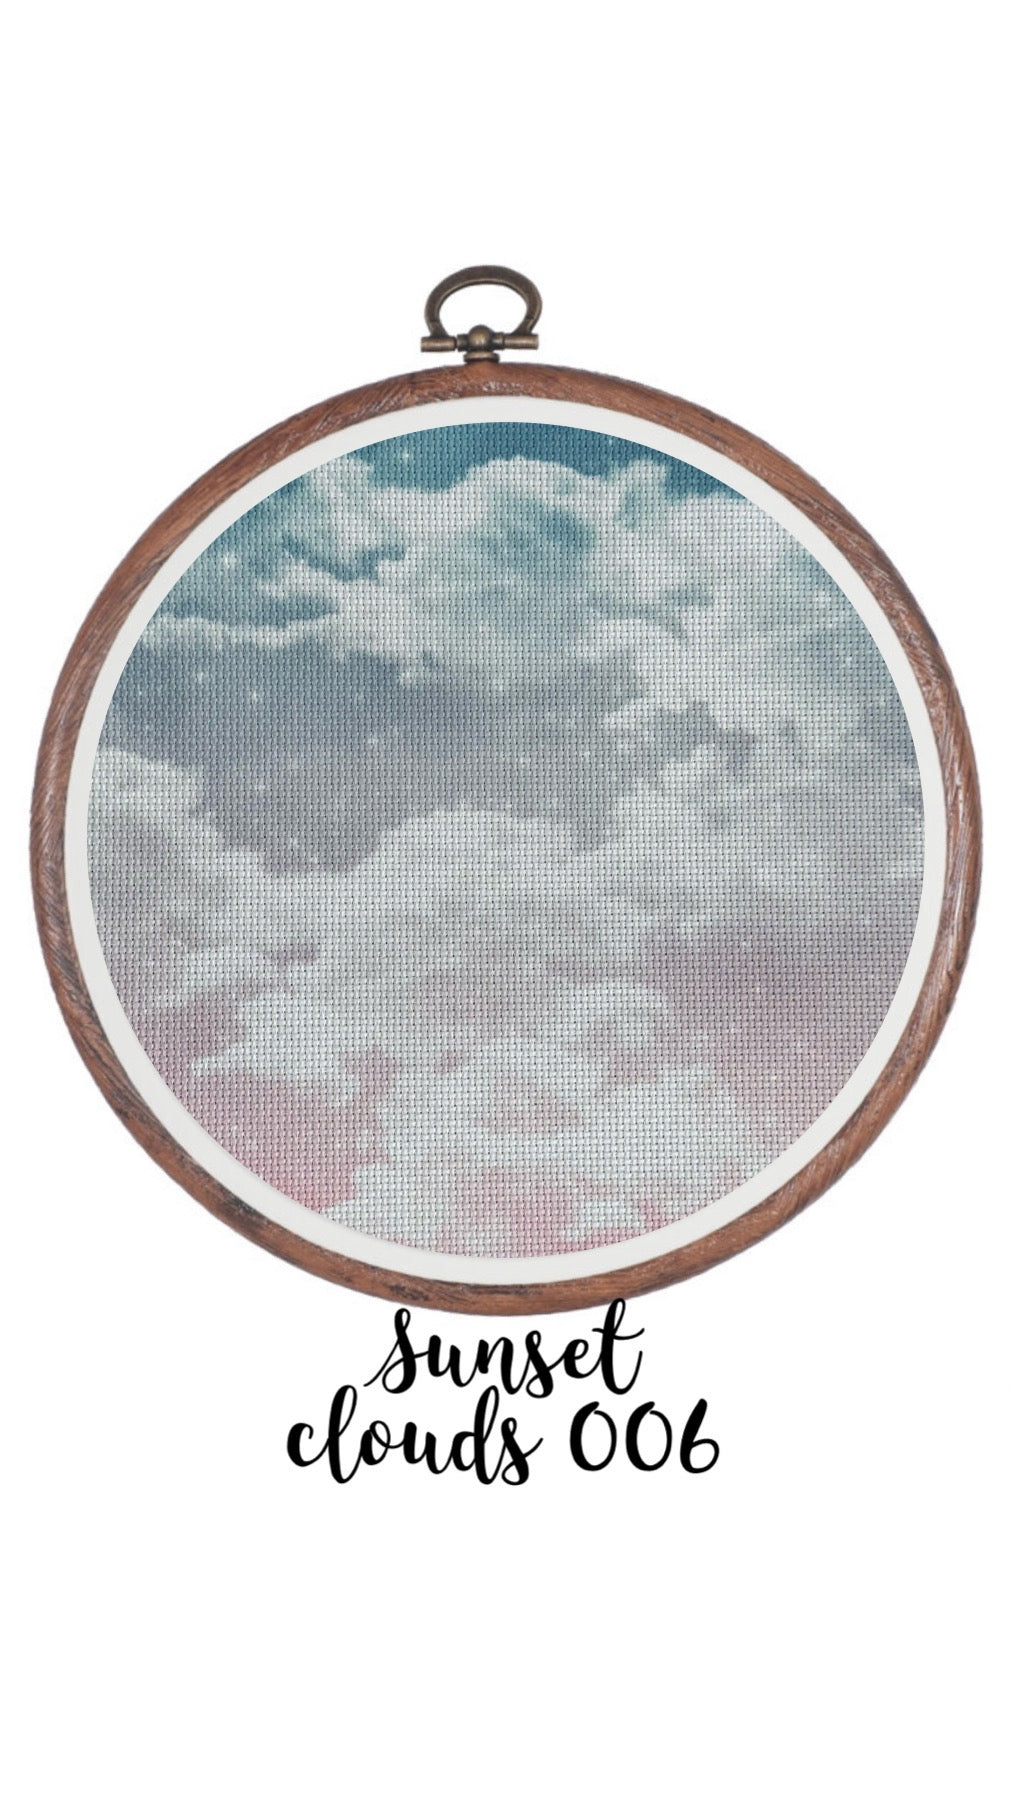 Sunset Clouds 006 Aida Cloth || Hand Dyed Effect Aida Canvas || Cross Stitching